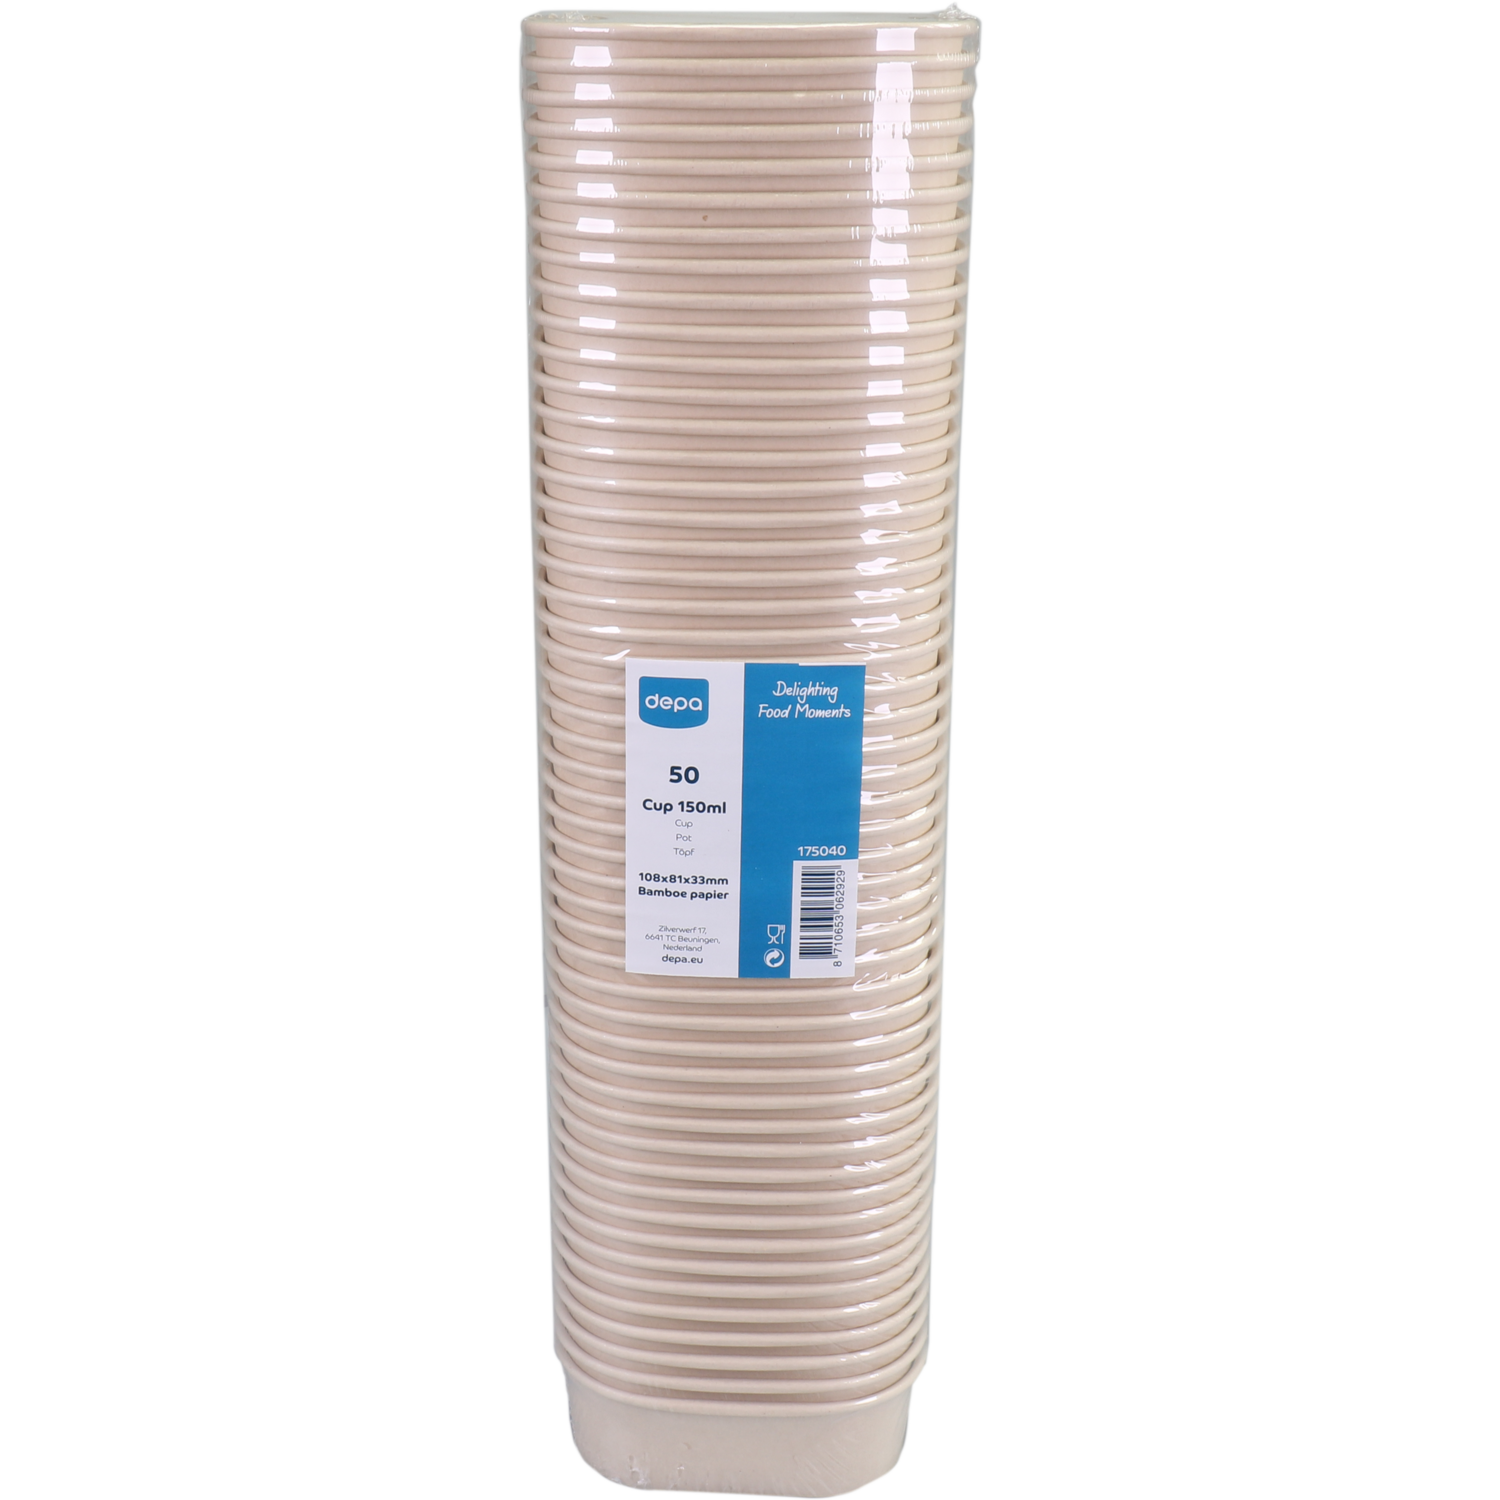 Cup, Bamboepapier/PP, 150ml, 108x81mm, 33mm, crème 3